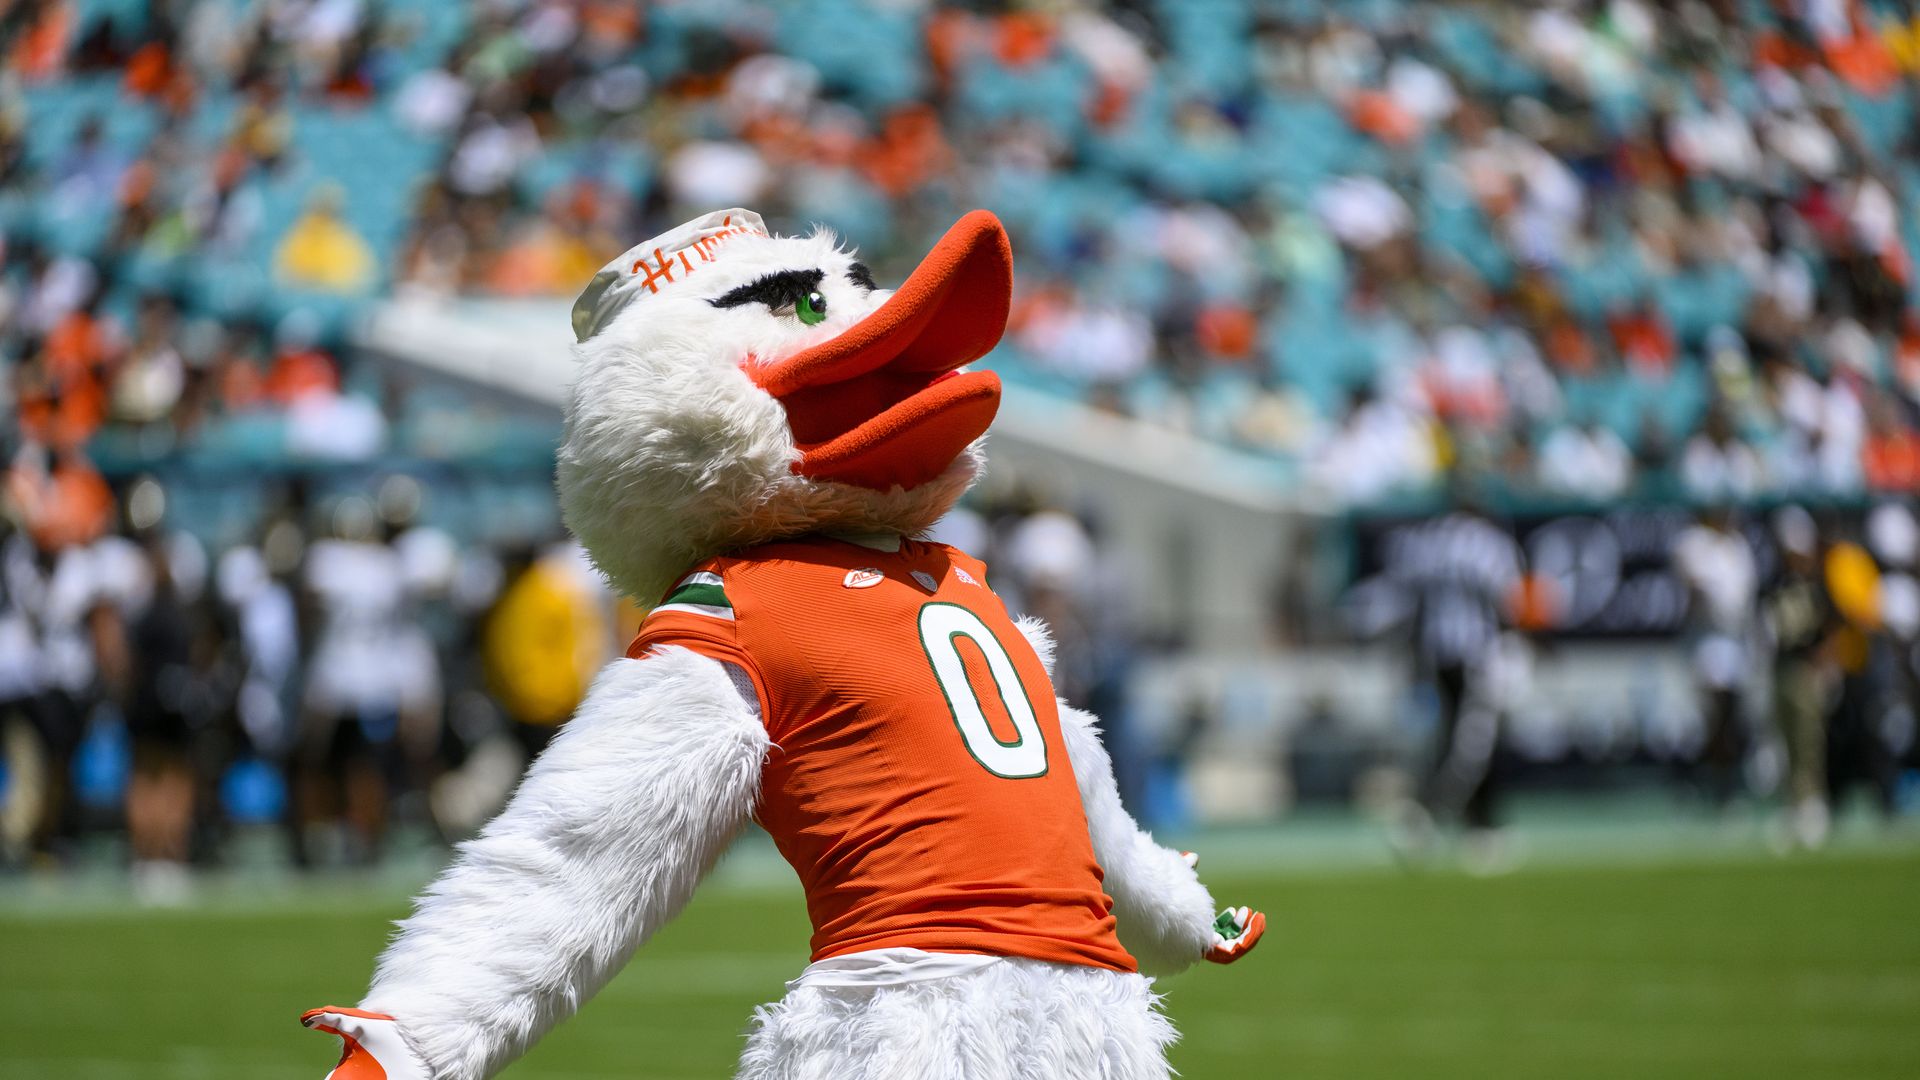 Miami mascot Sebastian the Ibis gestures on the field, wearing an orange jersey. 